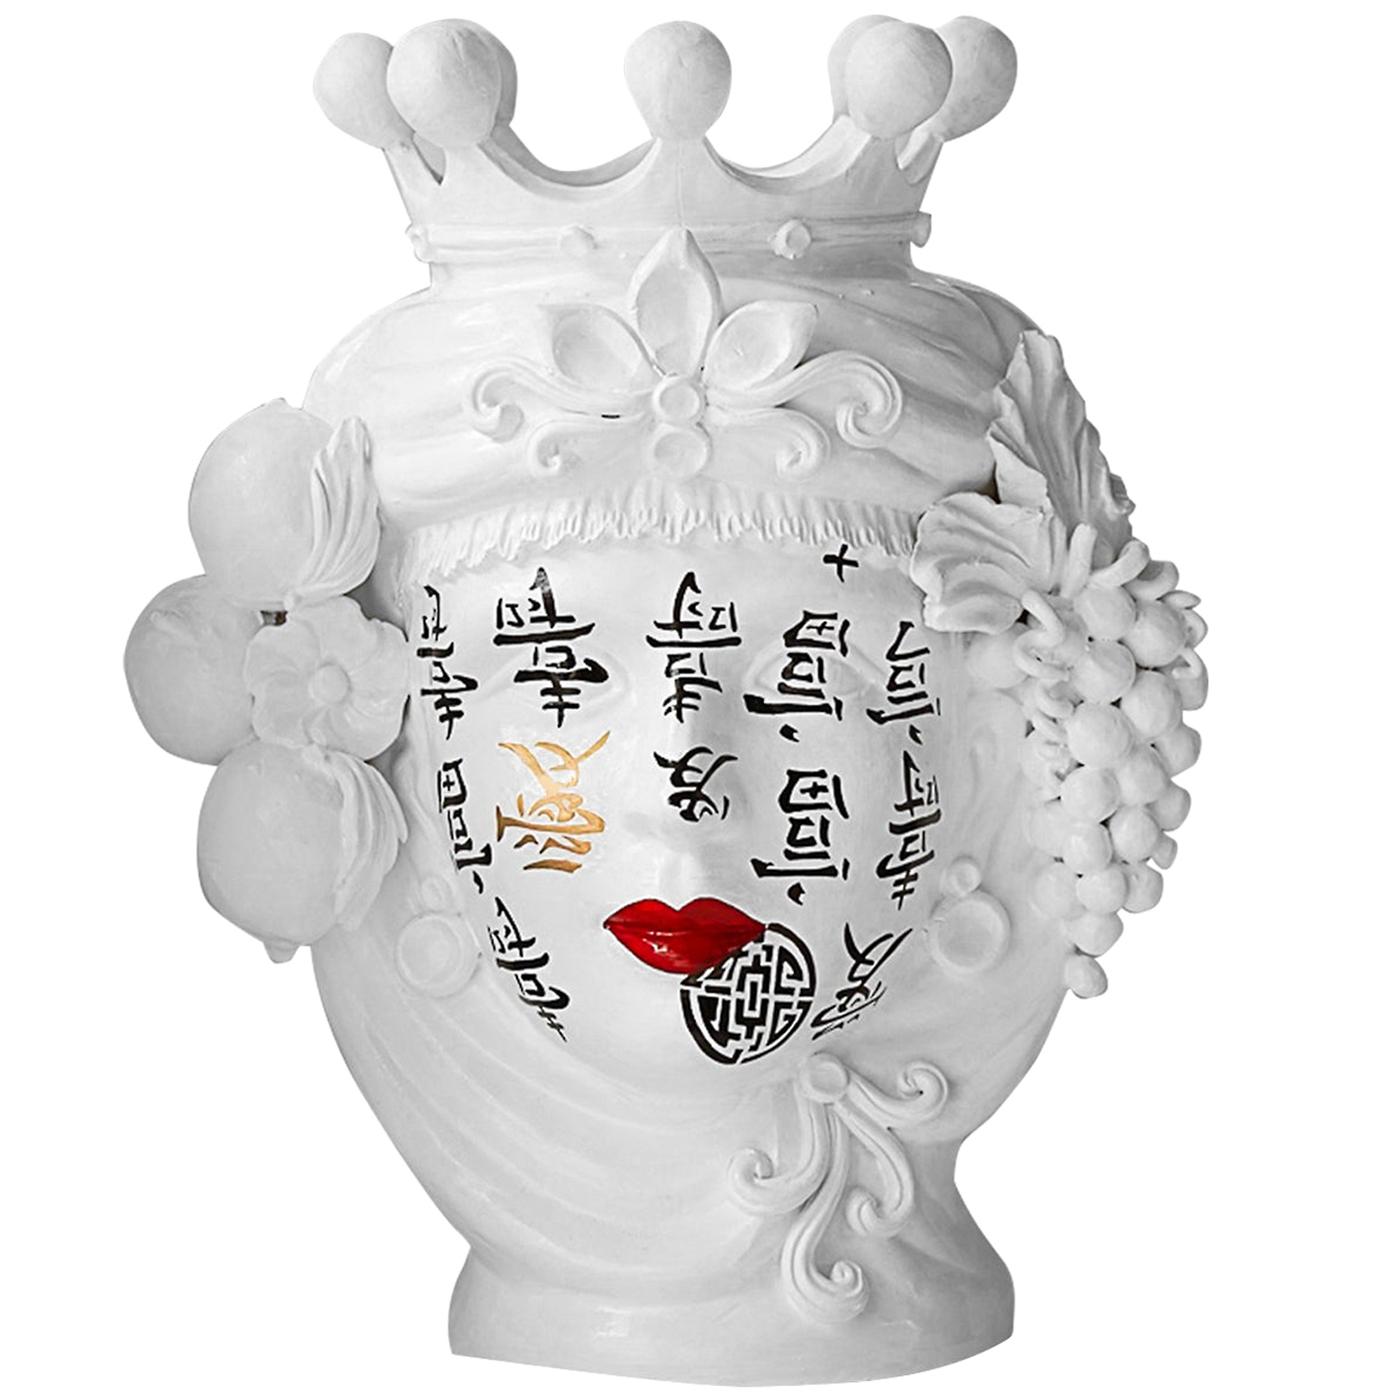 White and Black Sicilian Vase, Designed by Stefania Boemi